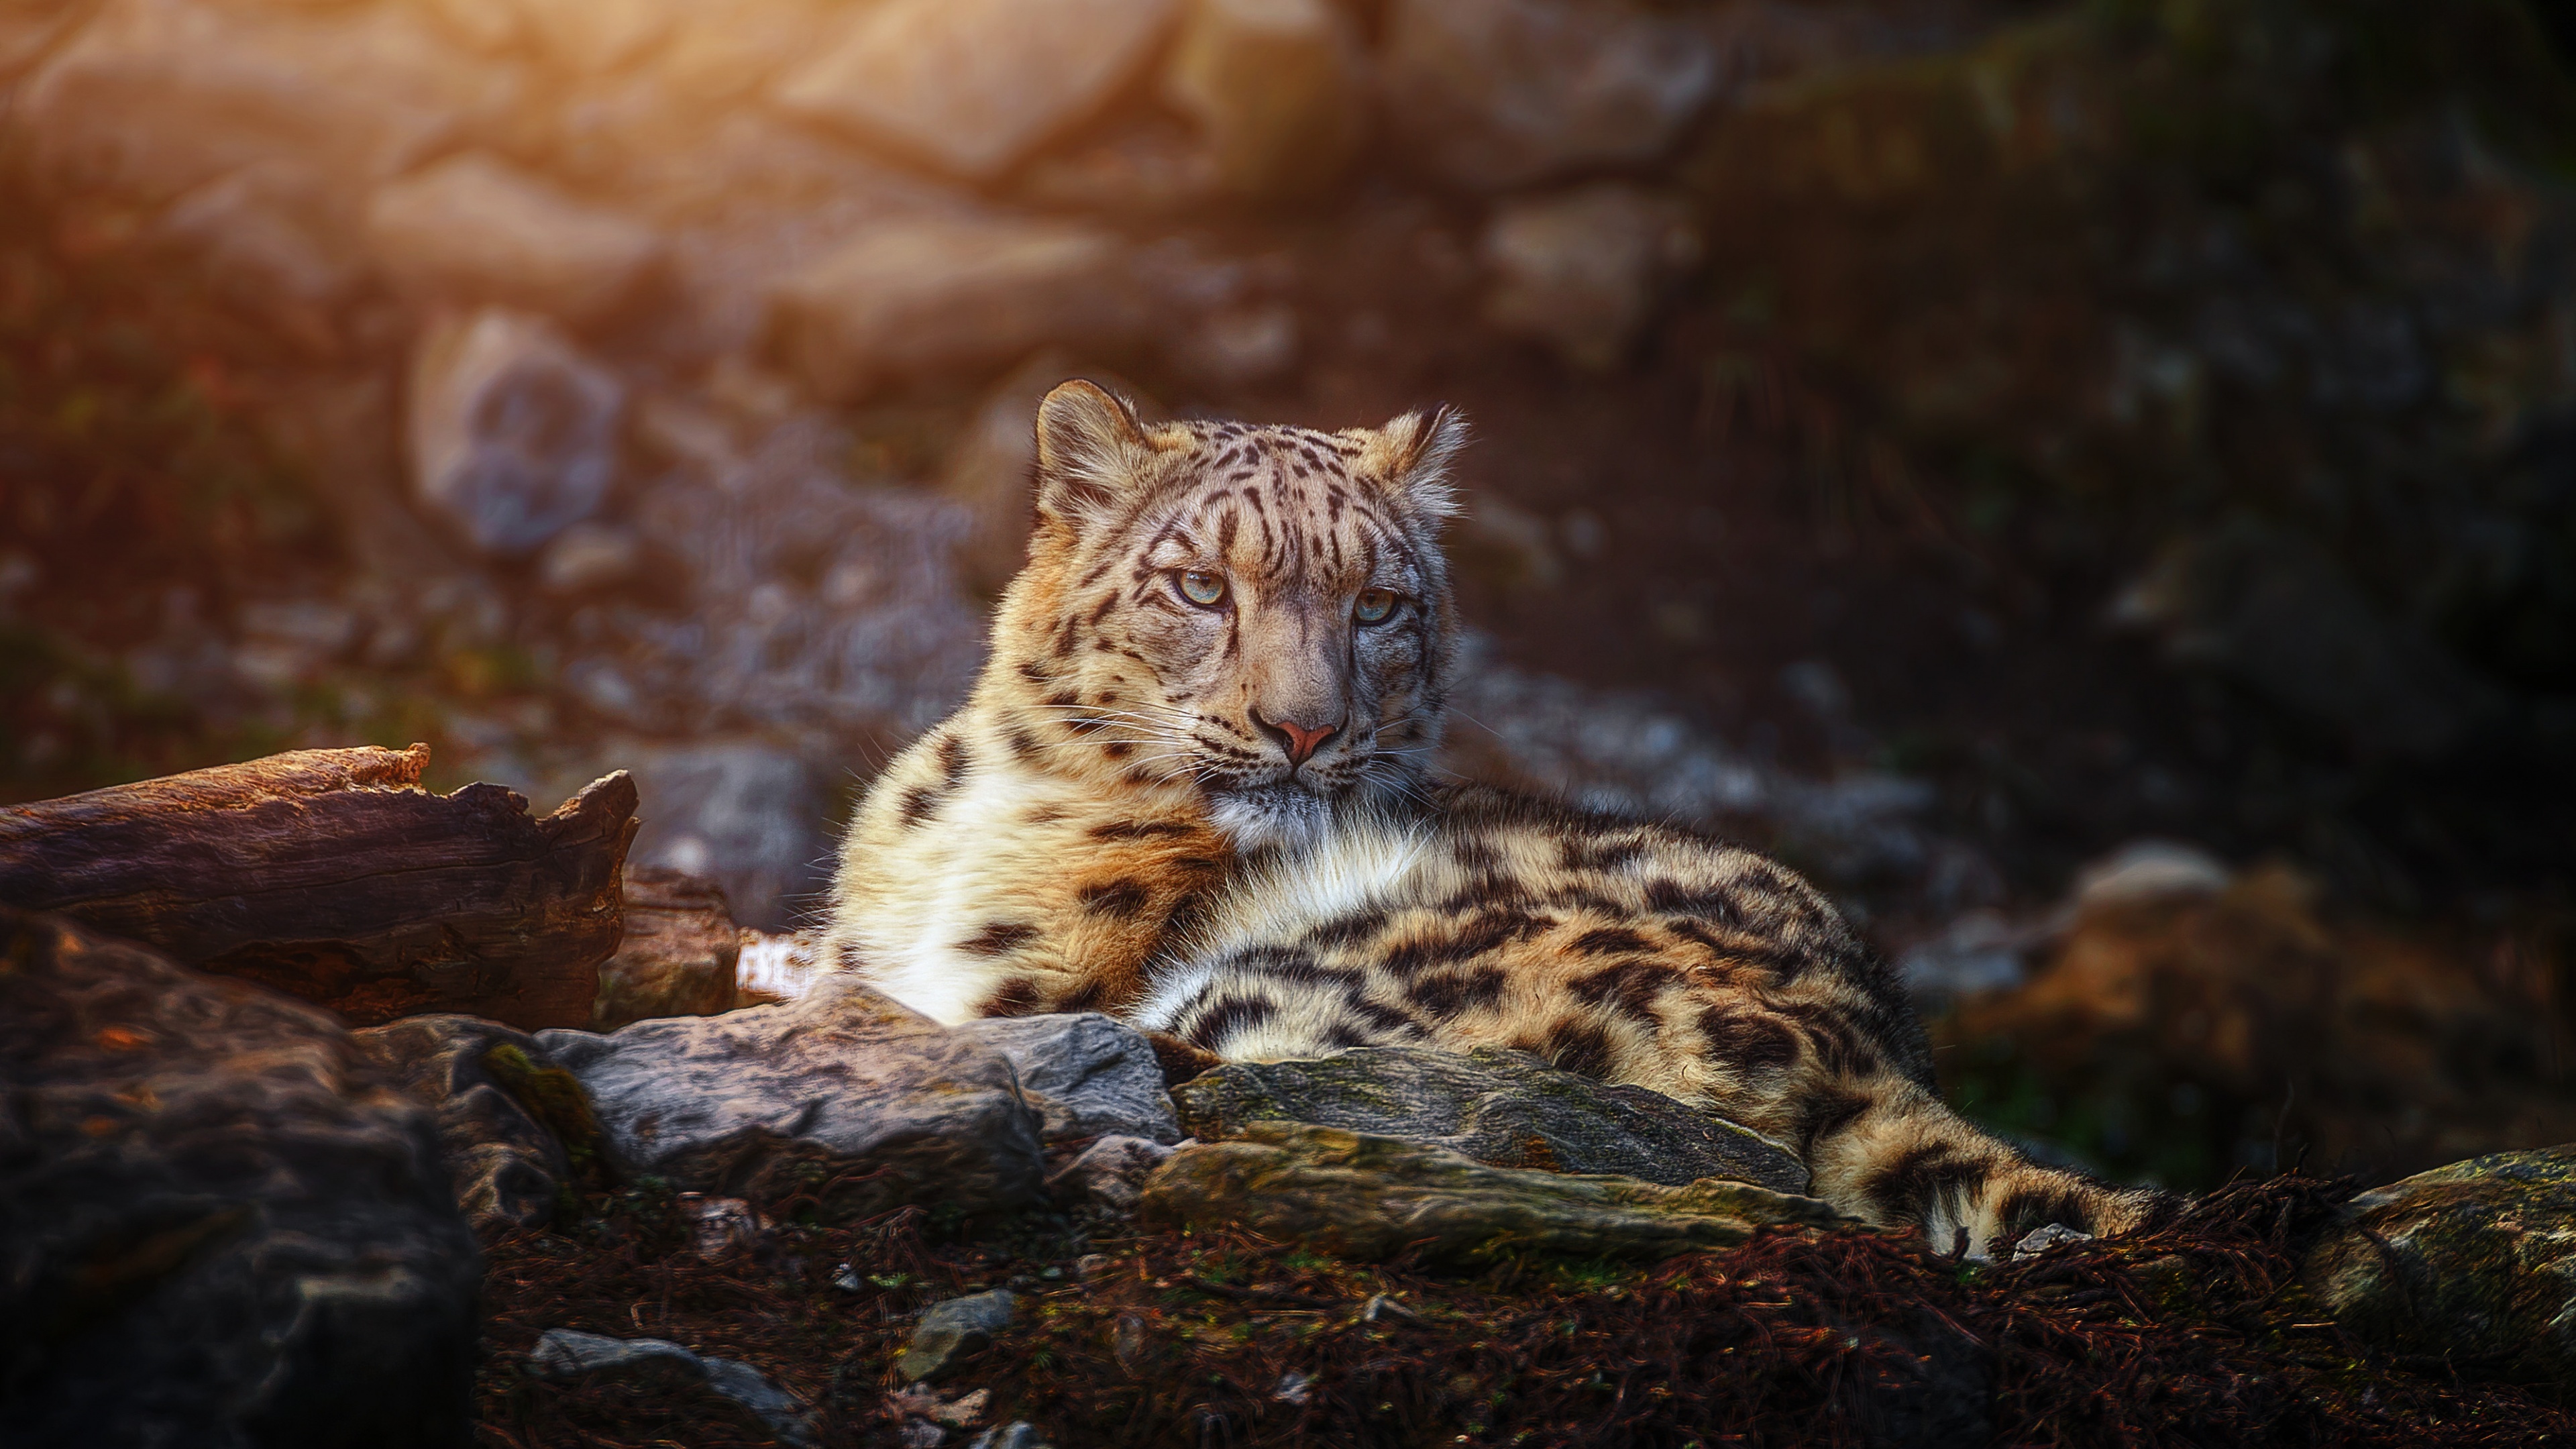 Snow Leopard wallpaper, 4K resolution, Wild animal portrait, Predatory gaze, 3840x2160 4K Desktop